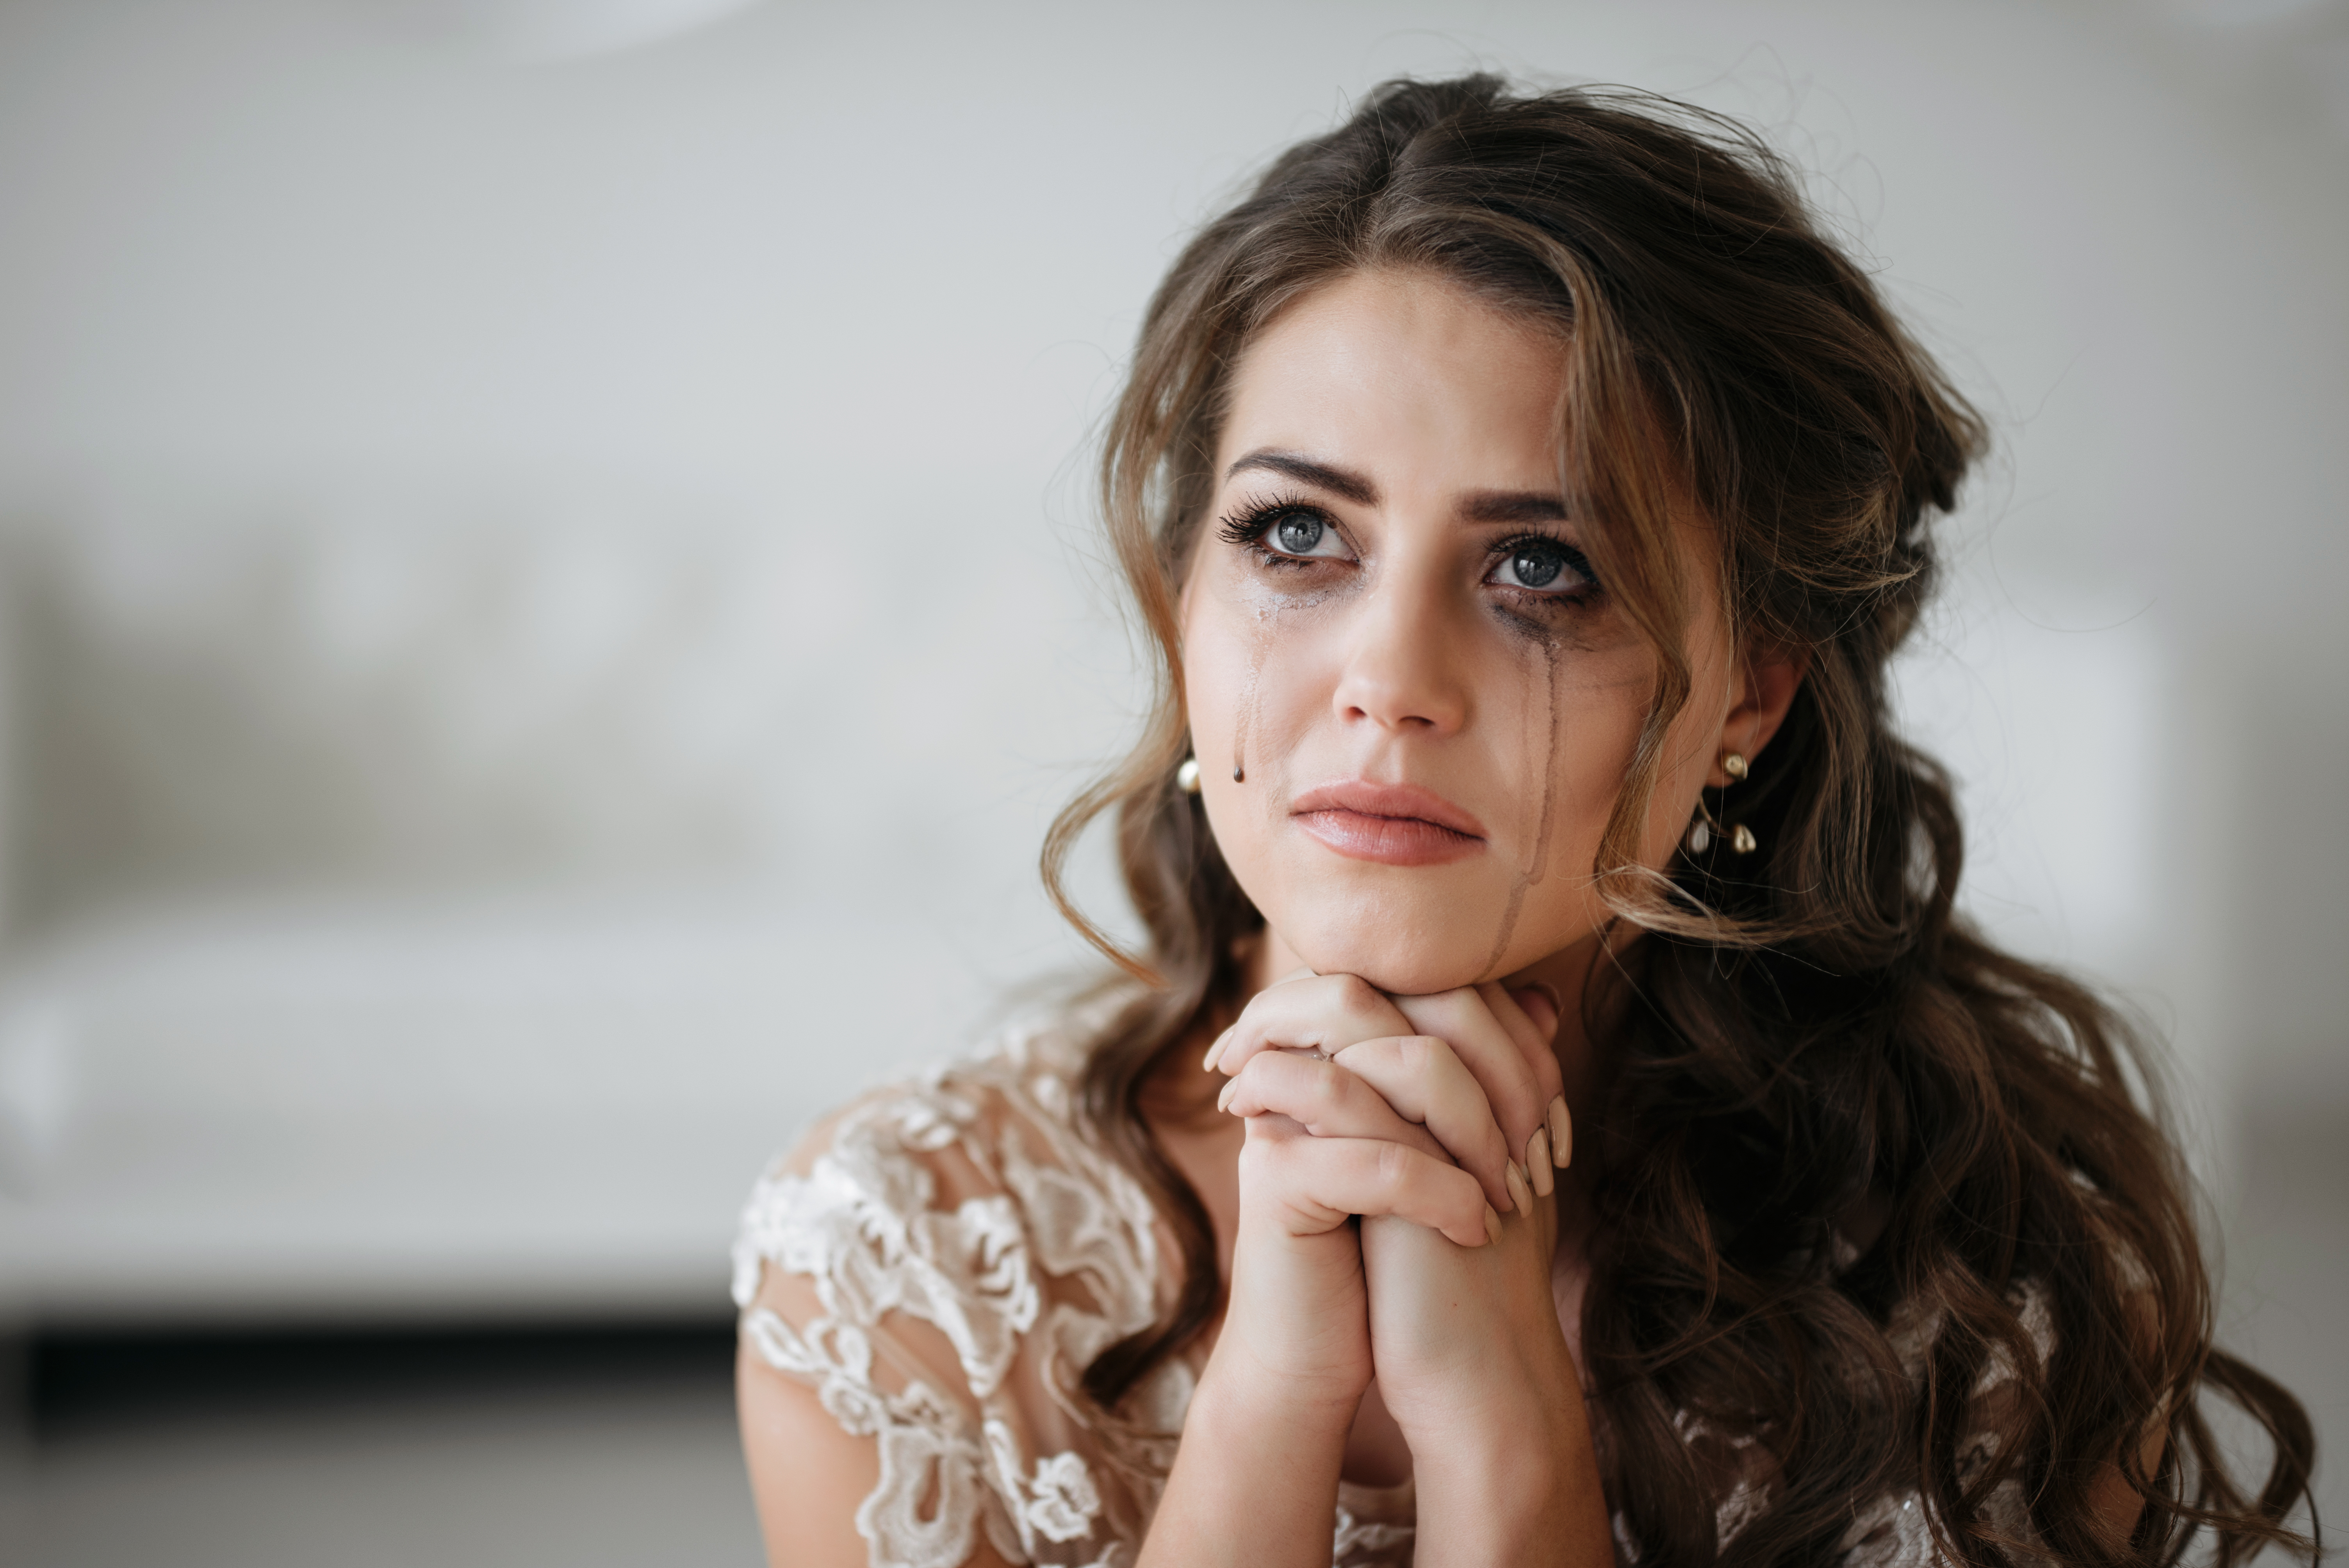 A sad bride | Source: Shutterstock